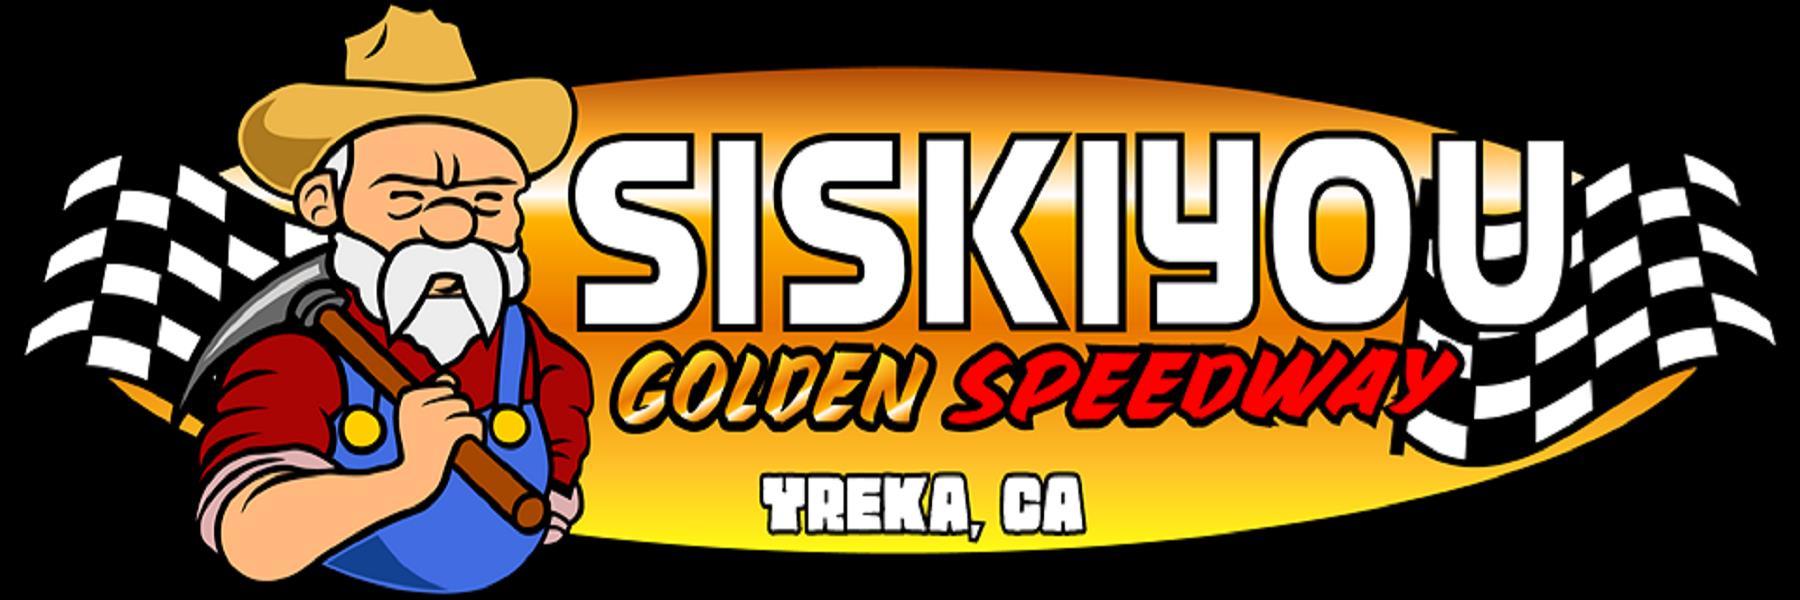 7/3/2021 - Siskiyou Golden Speedway